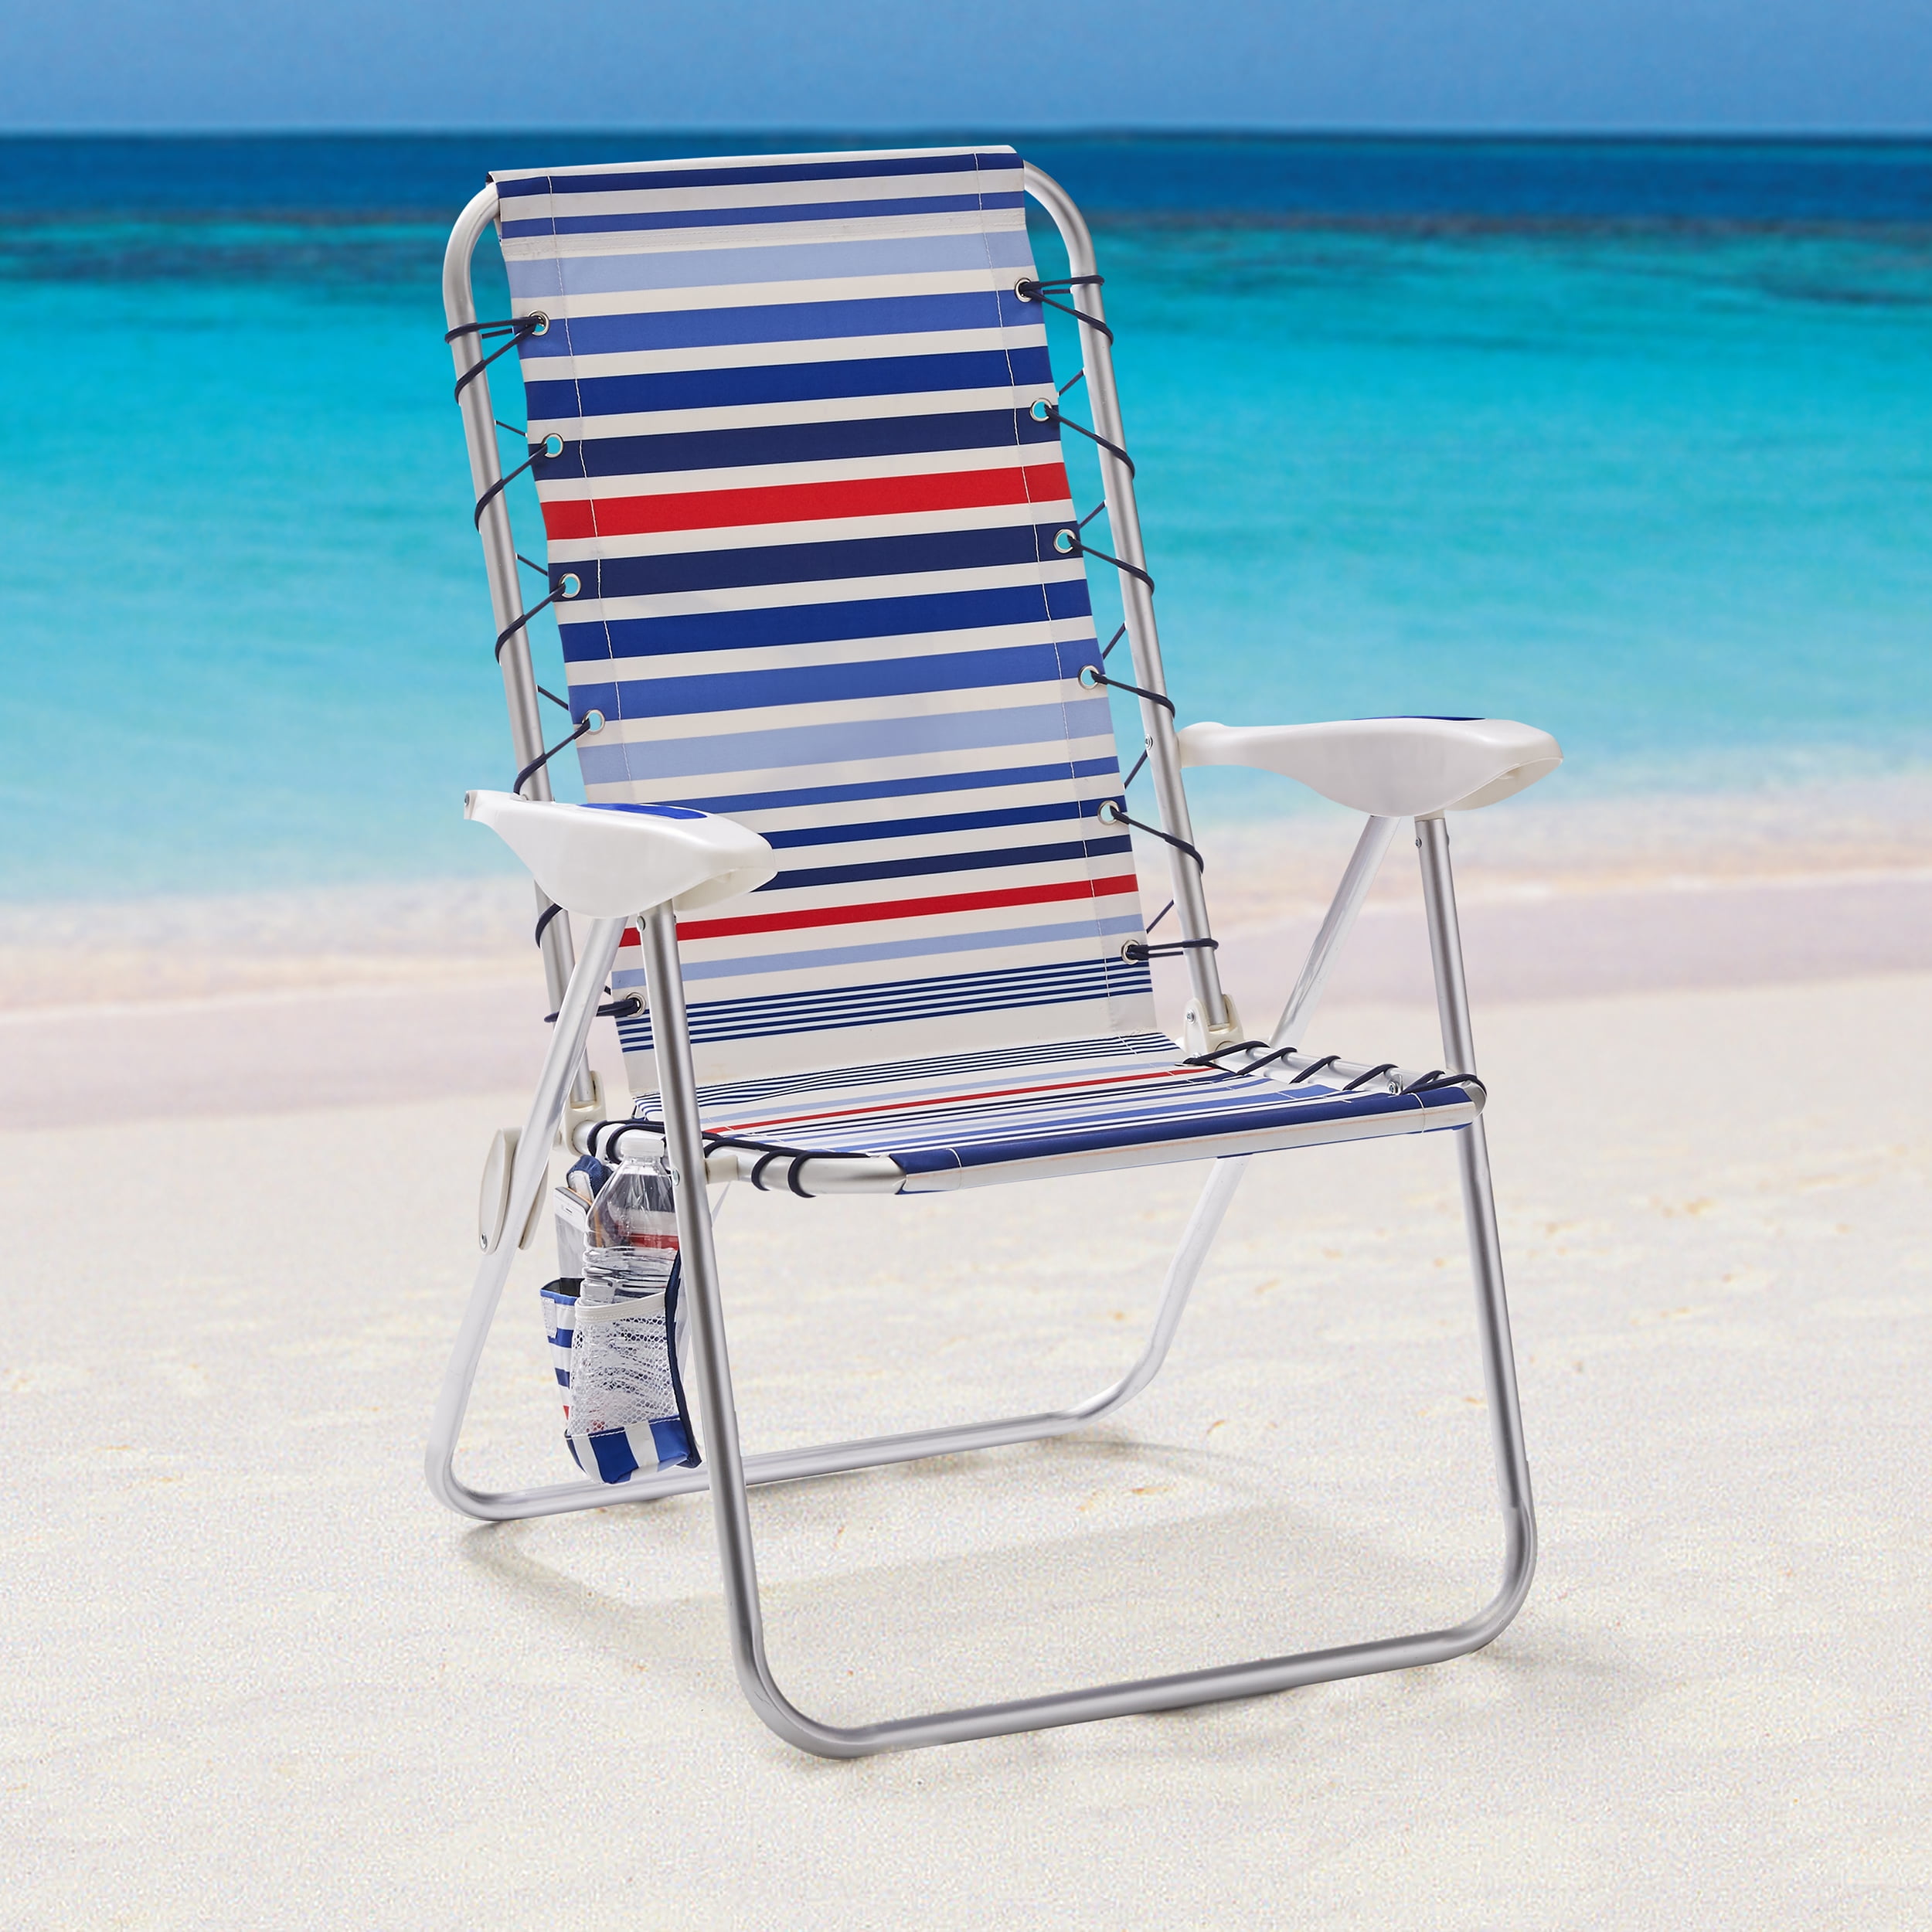 Mainstays Aluminum Bungee Beach Chair, Red White & Blue Stripe